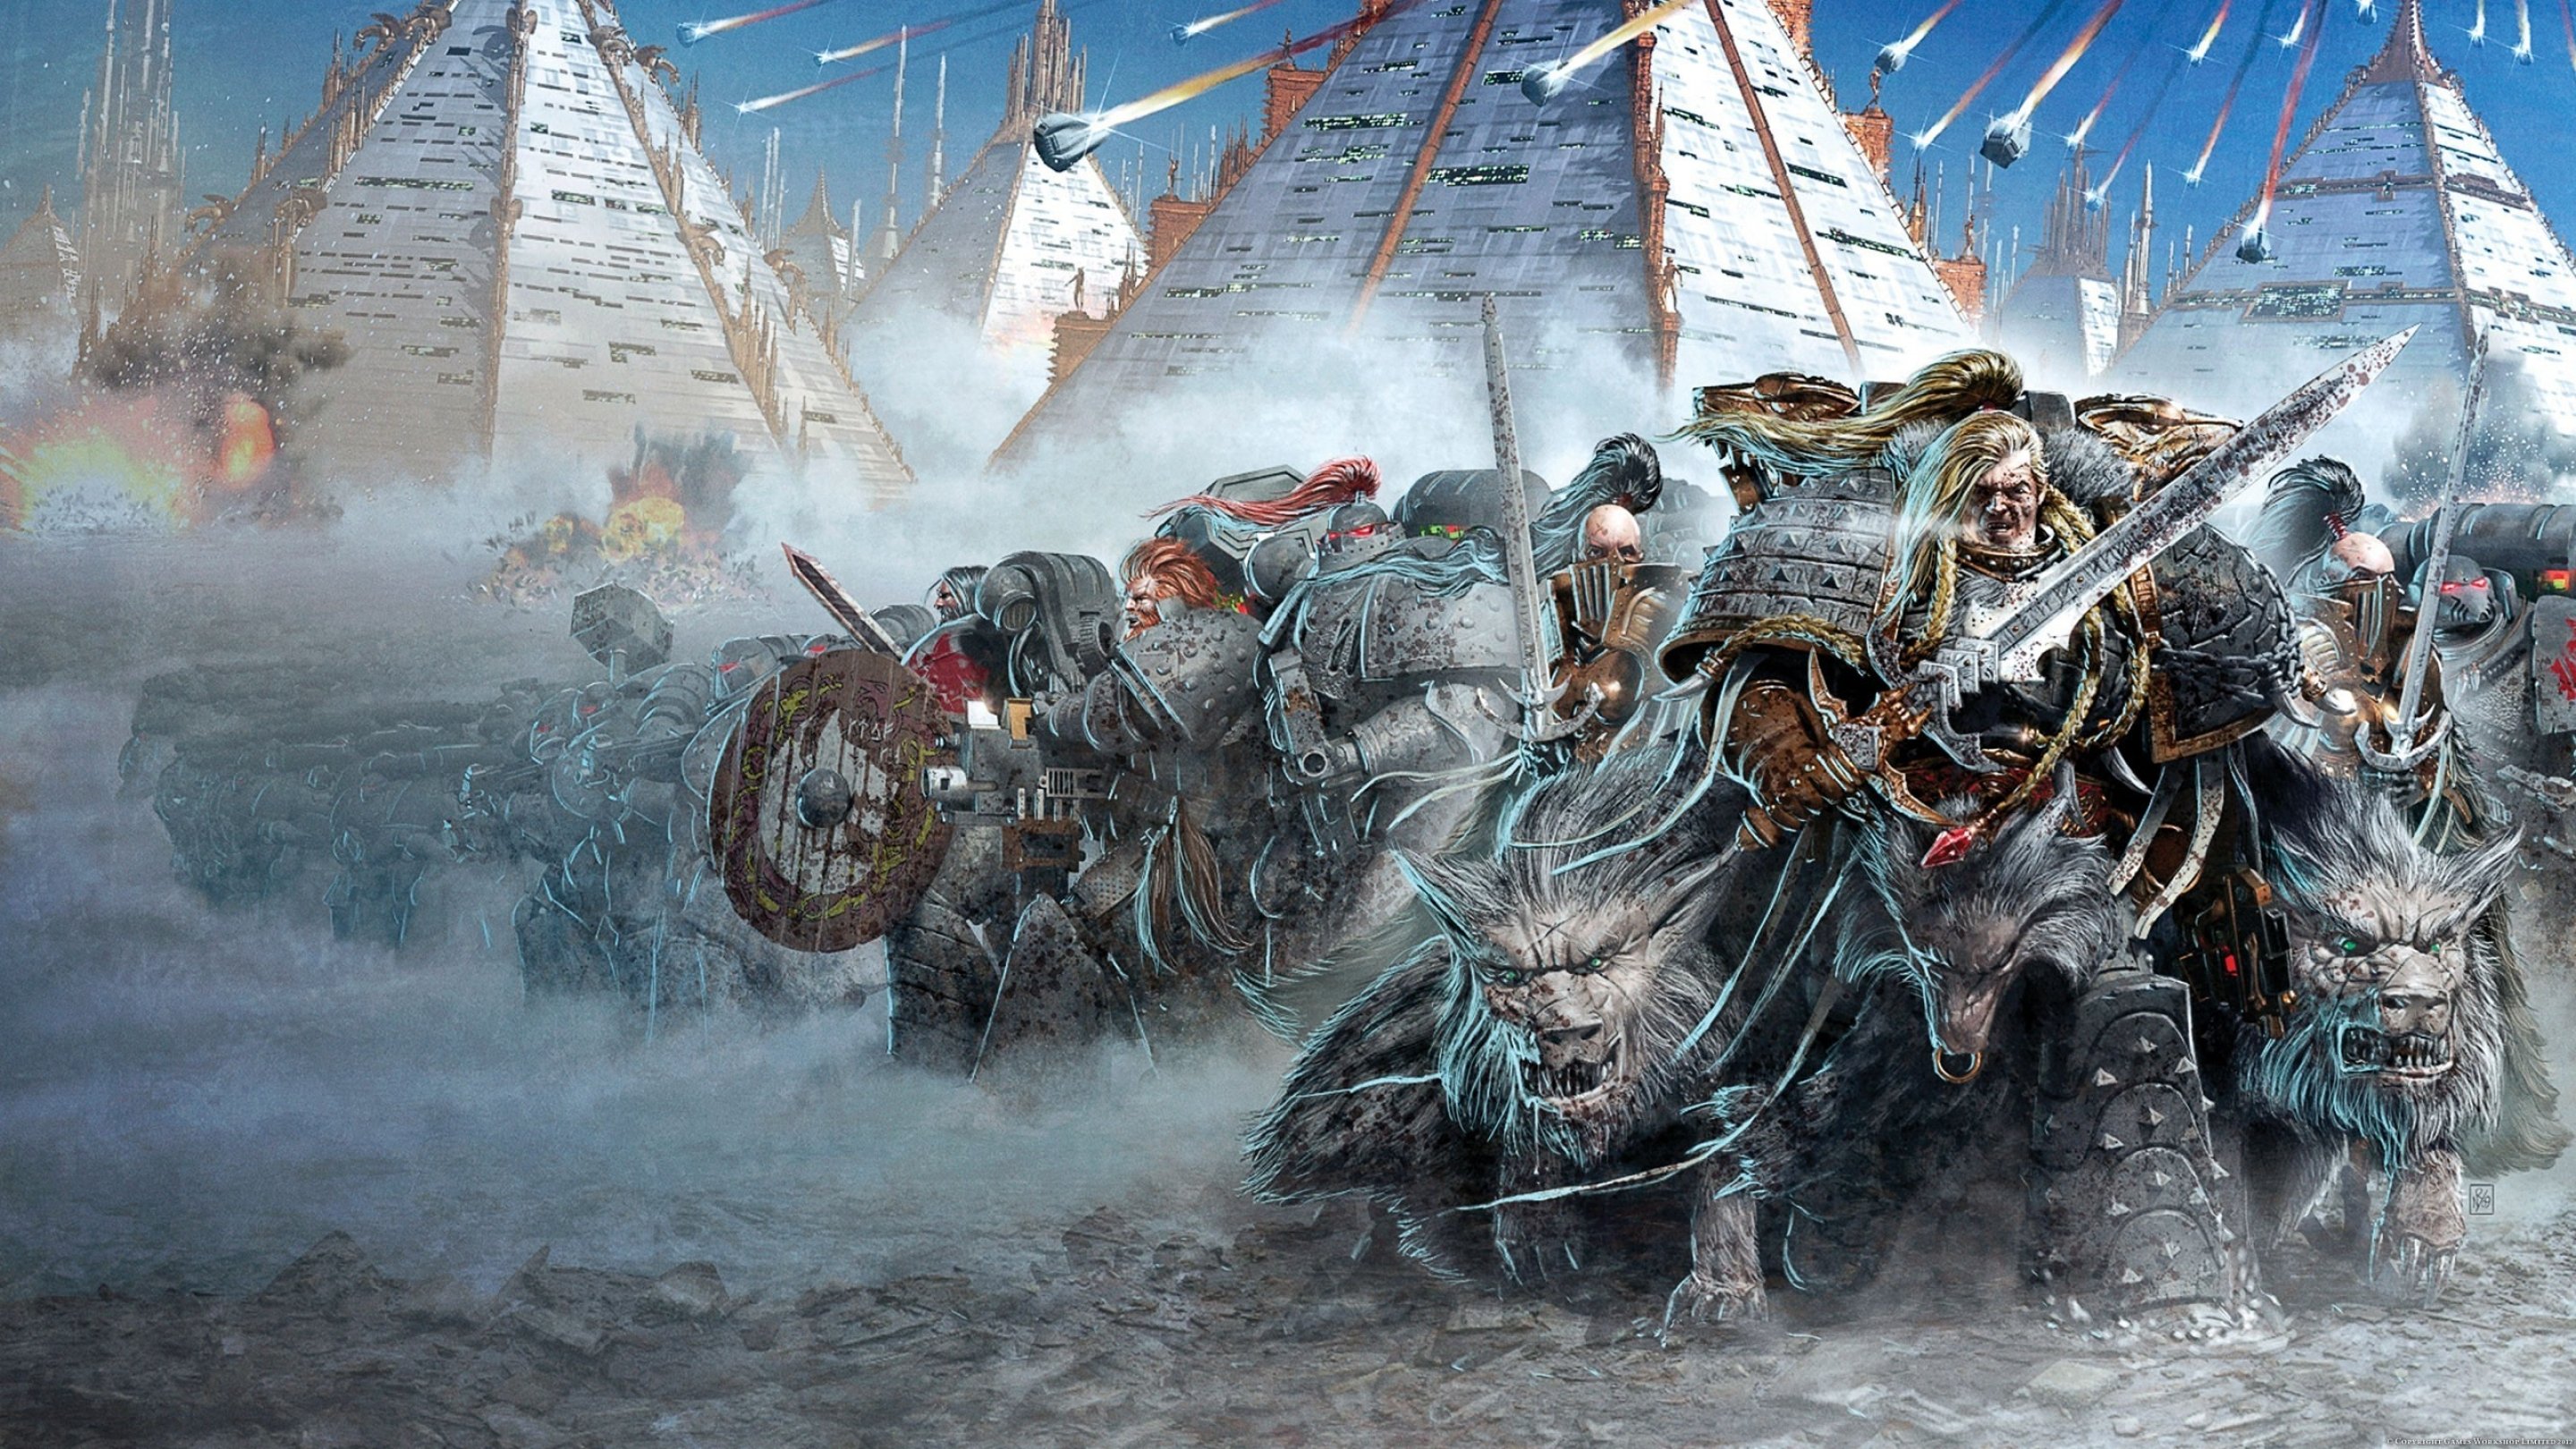 fond d'écran warhammer 40k,oeuvre de cg,mythologie,viking,véhicule,rébellion